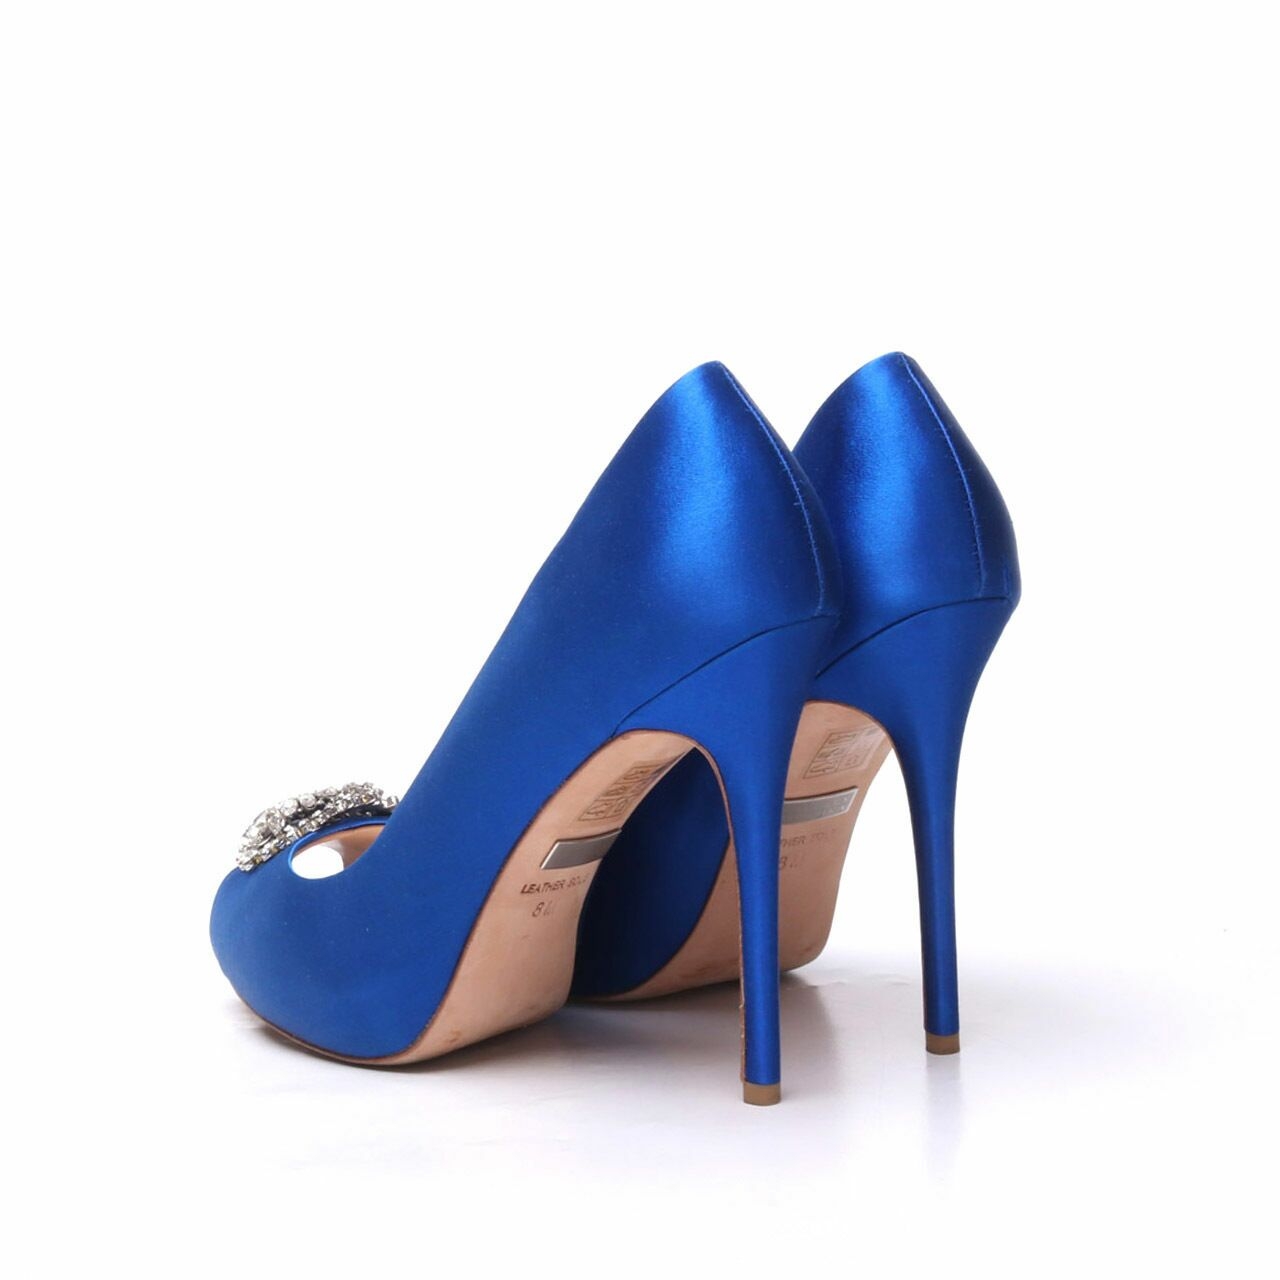 Badgley Mischka Blue Heels